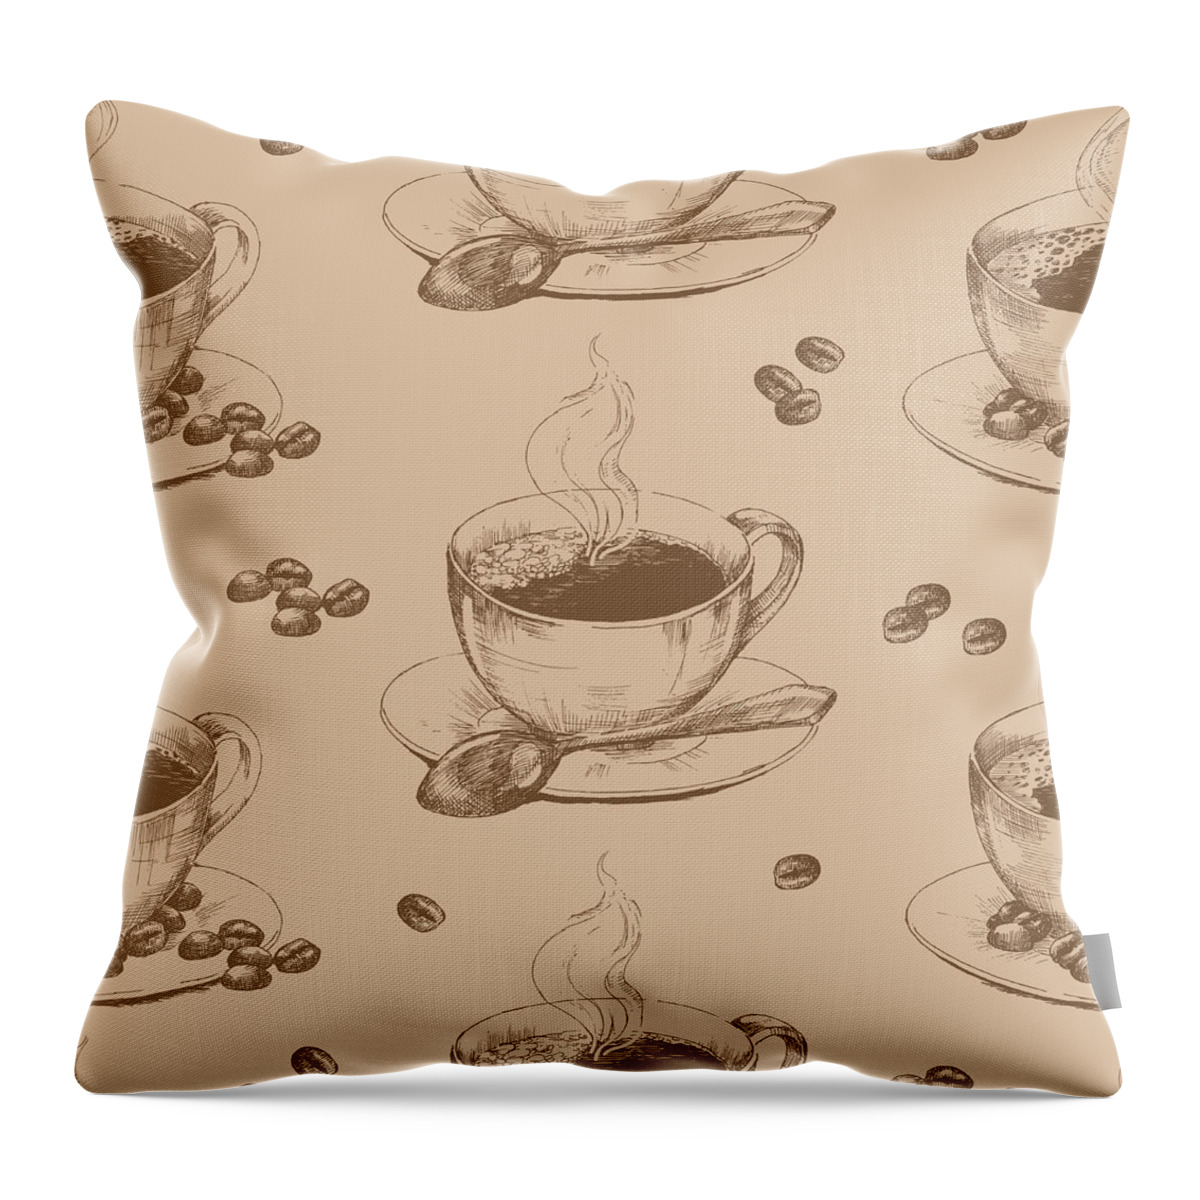 Art Throw Pillow featuring the digital art Cup Of Hot Coffee Seamless by Annagarmatiy